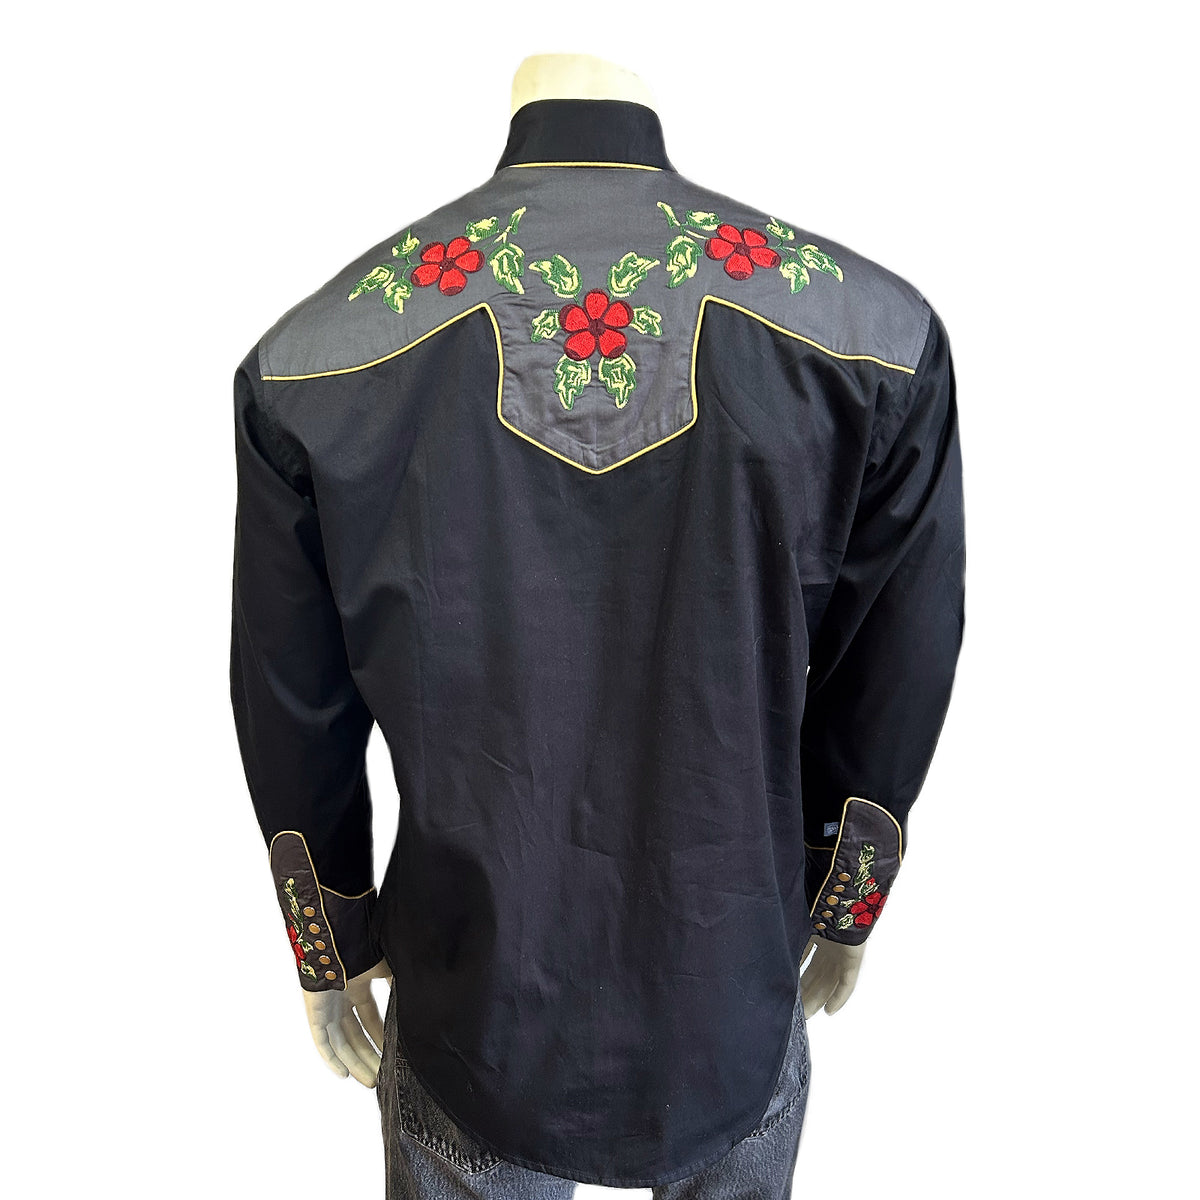 Men's Floral 2-Tone Black & Grey Embroidered Western Shirt